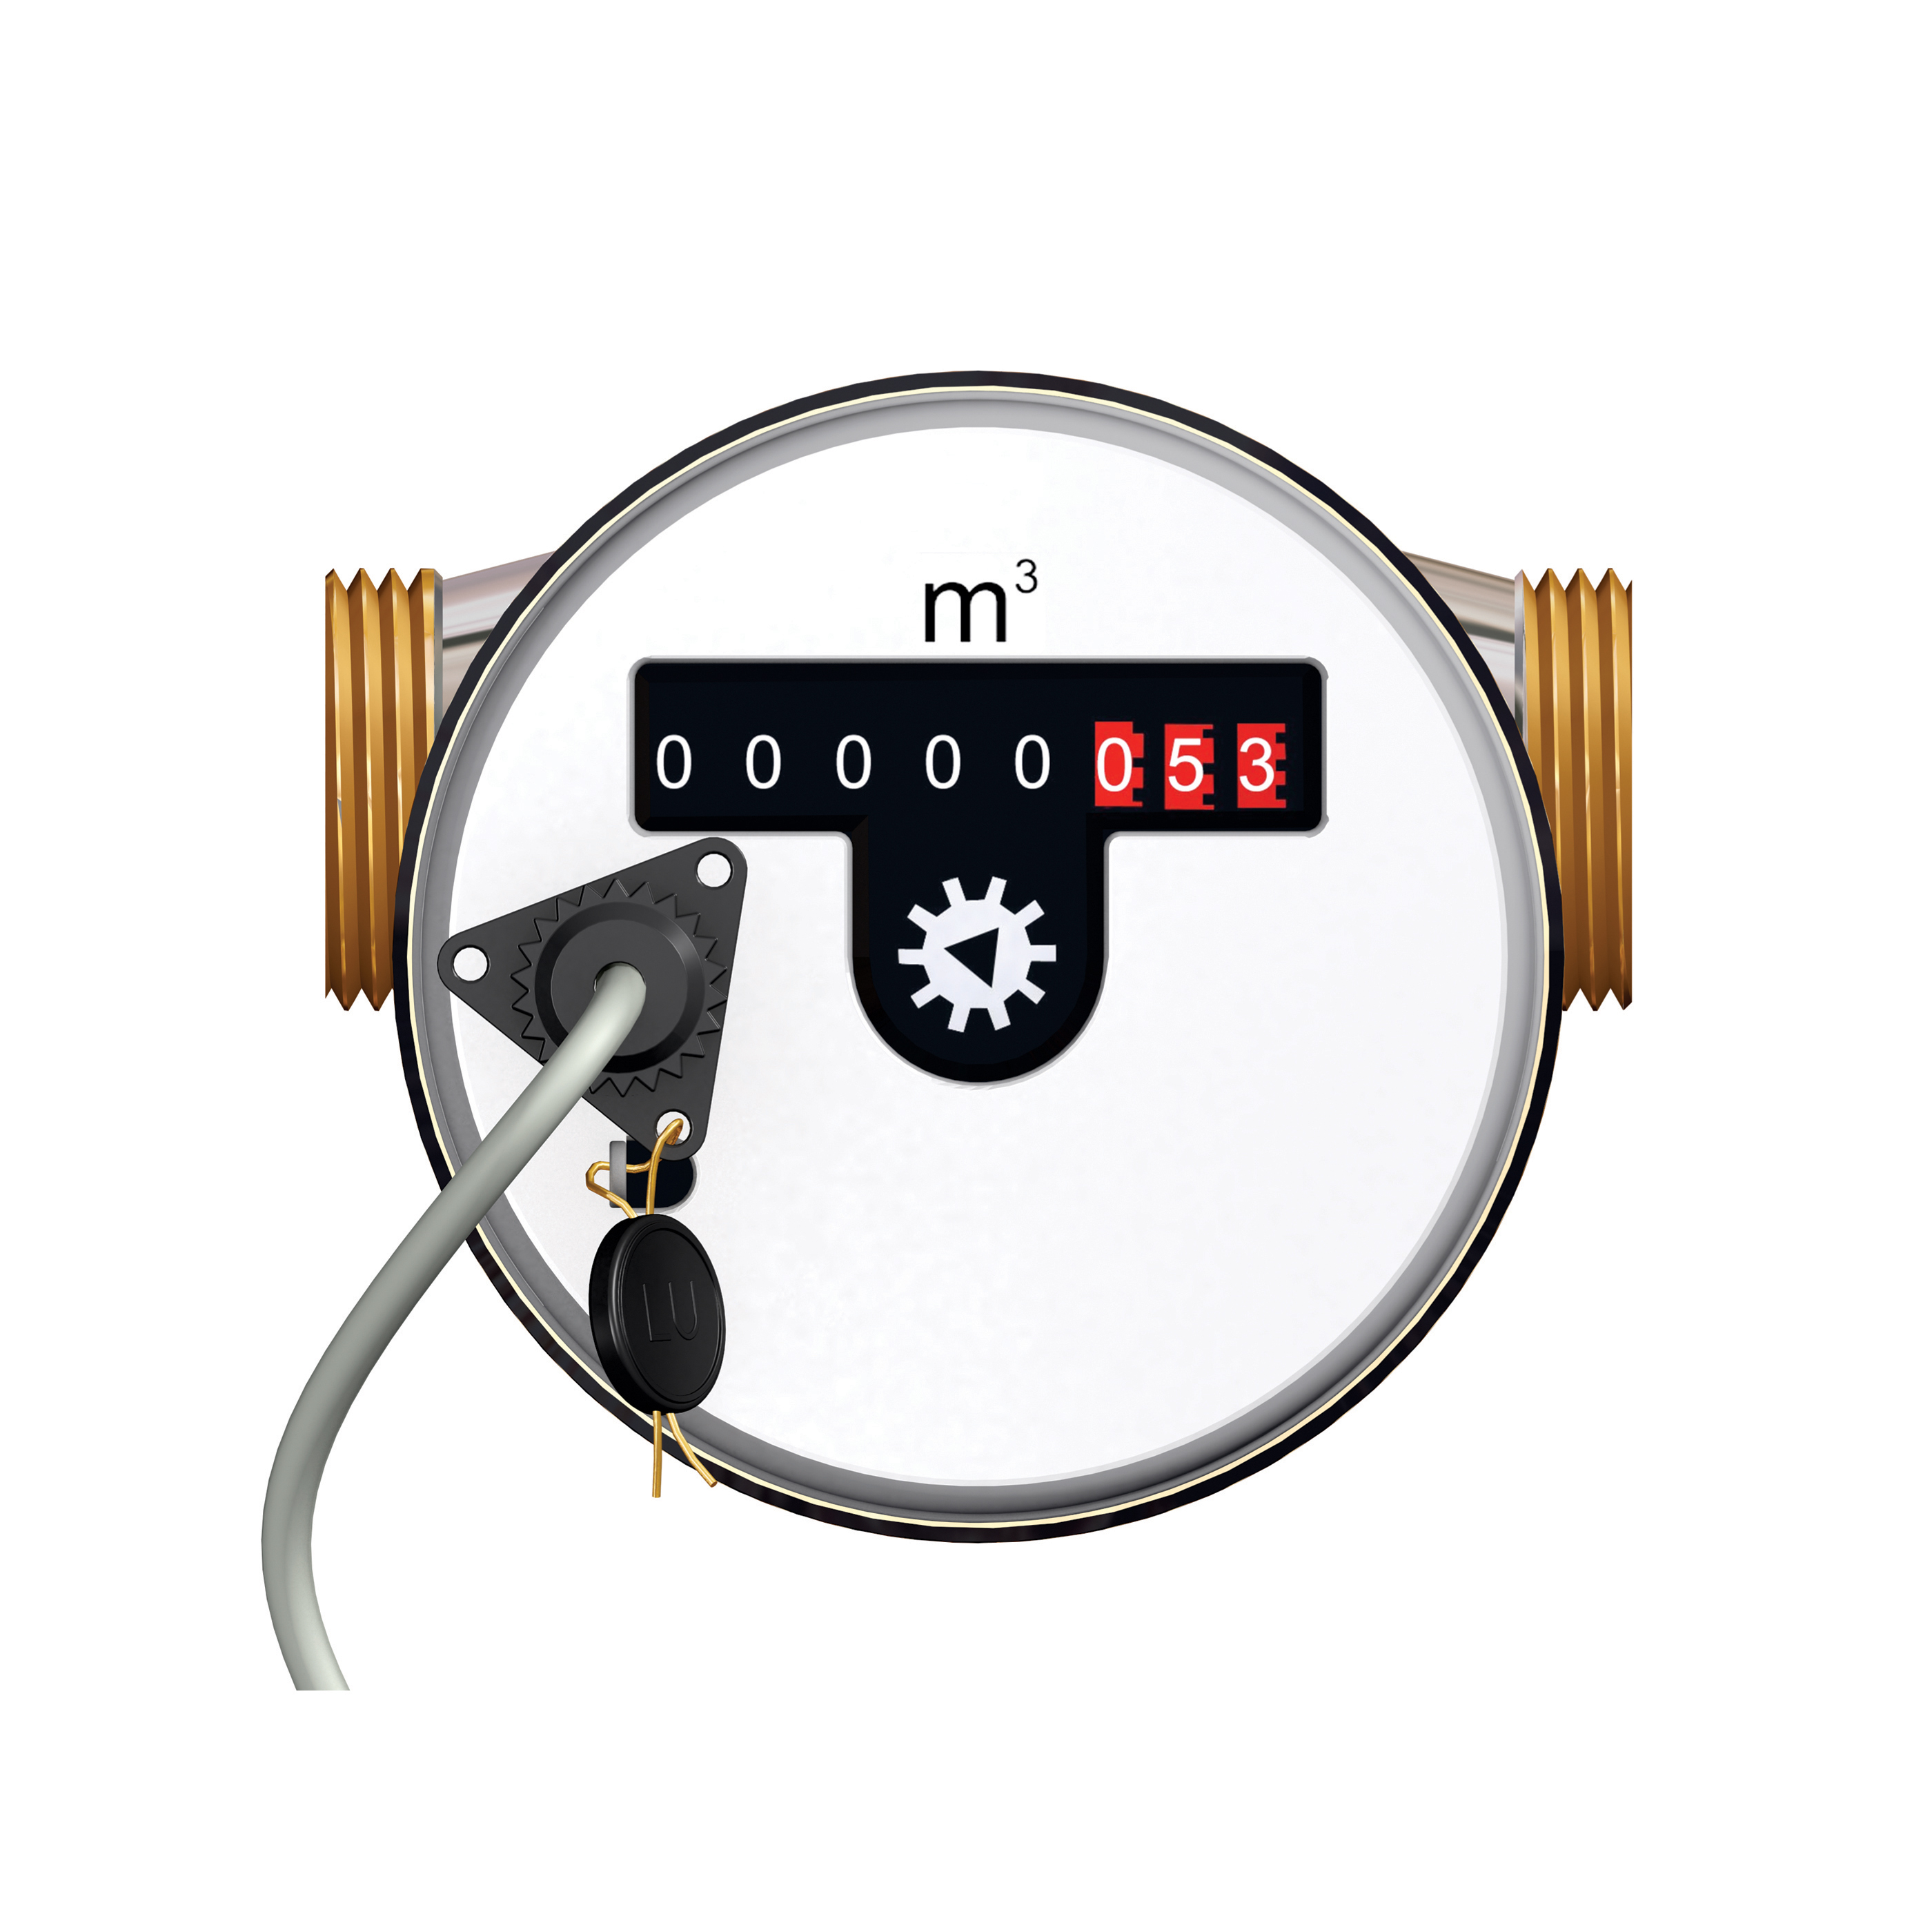 17739 Impulse output watermeter with digital display